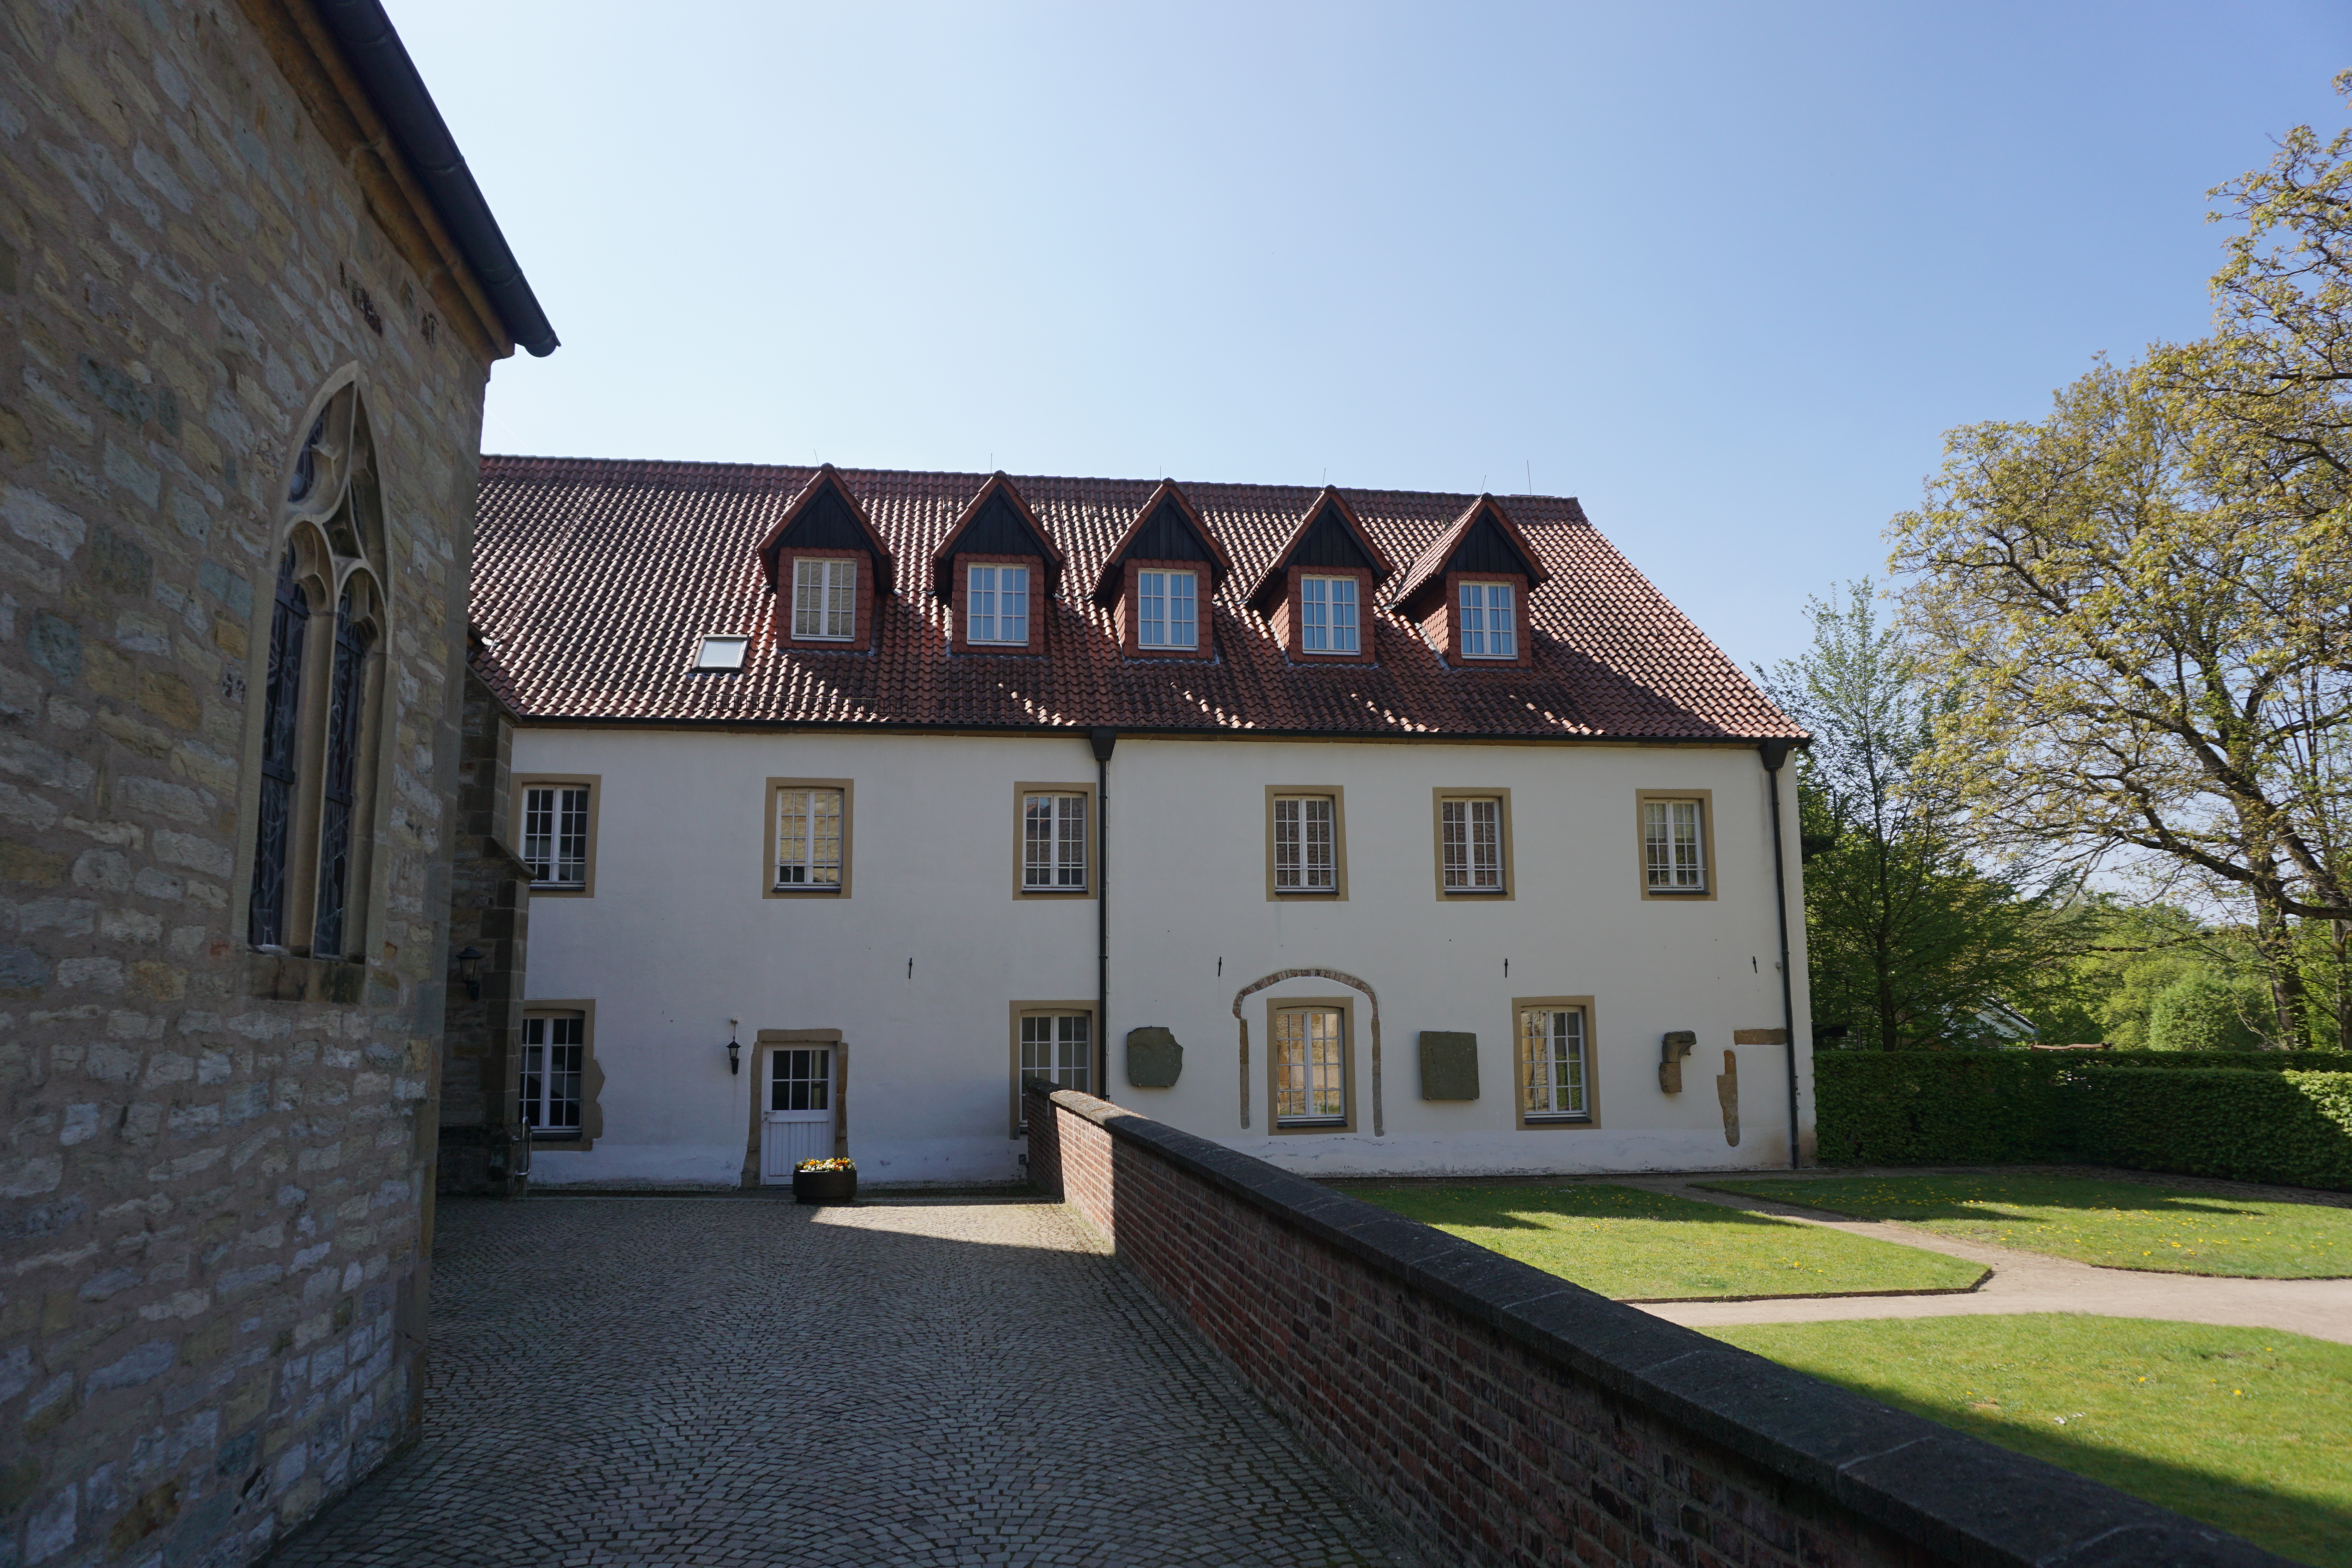 Pfarrzentrum der ehemaligen Klosteranlage Herzebrock, Herzebrock-Clarholz.
